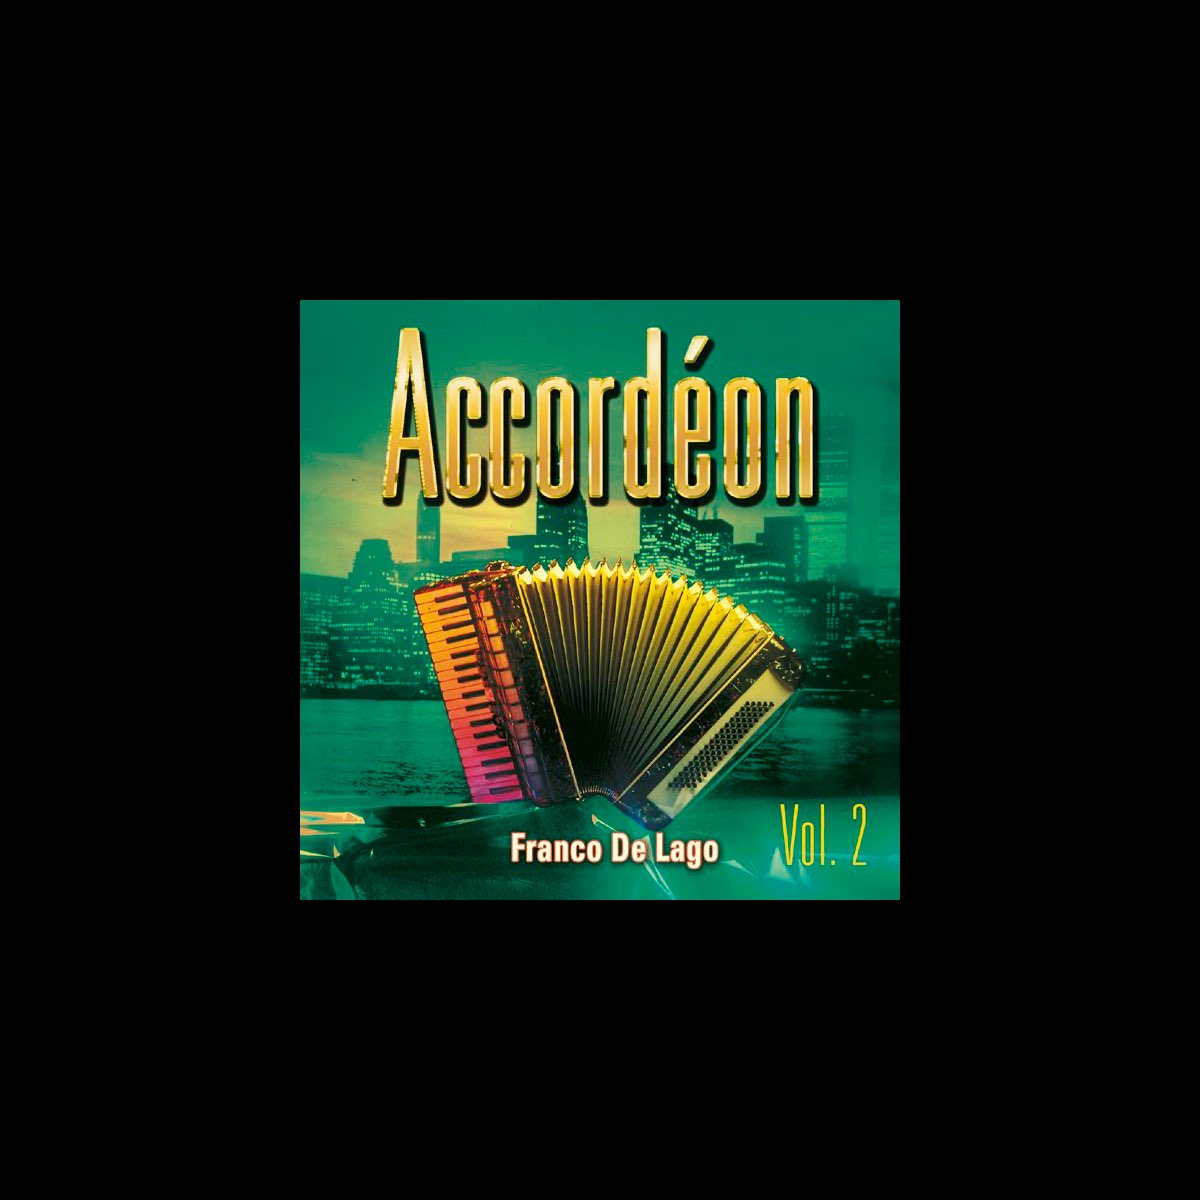 Accordéon Hits, Vol. 2 - Album by Franco De Lago - Apple Music